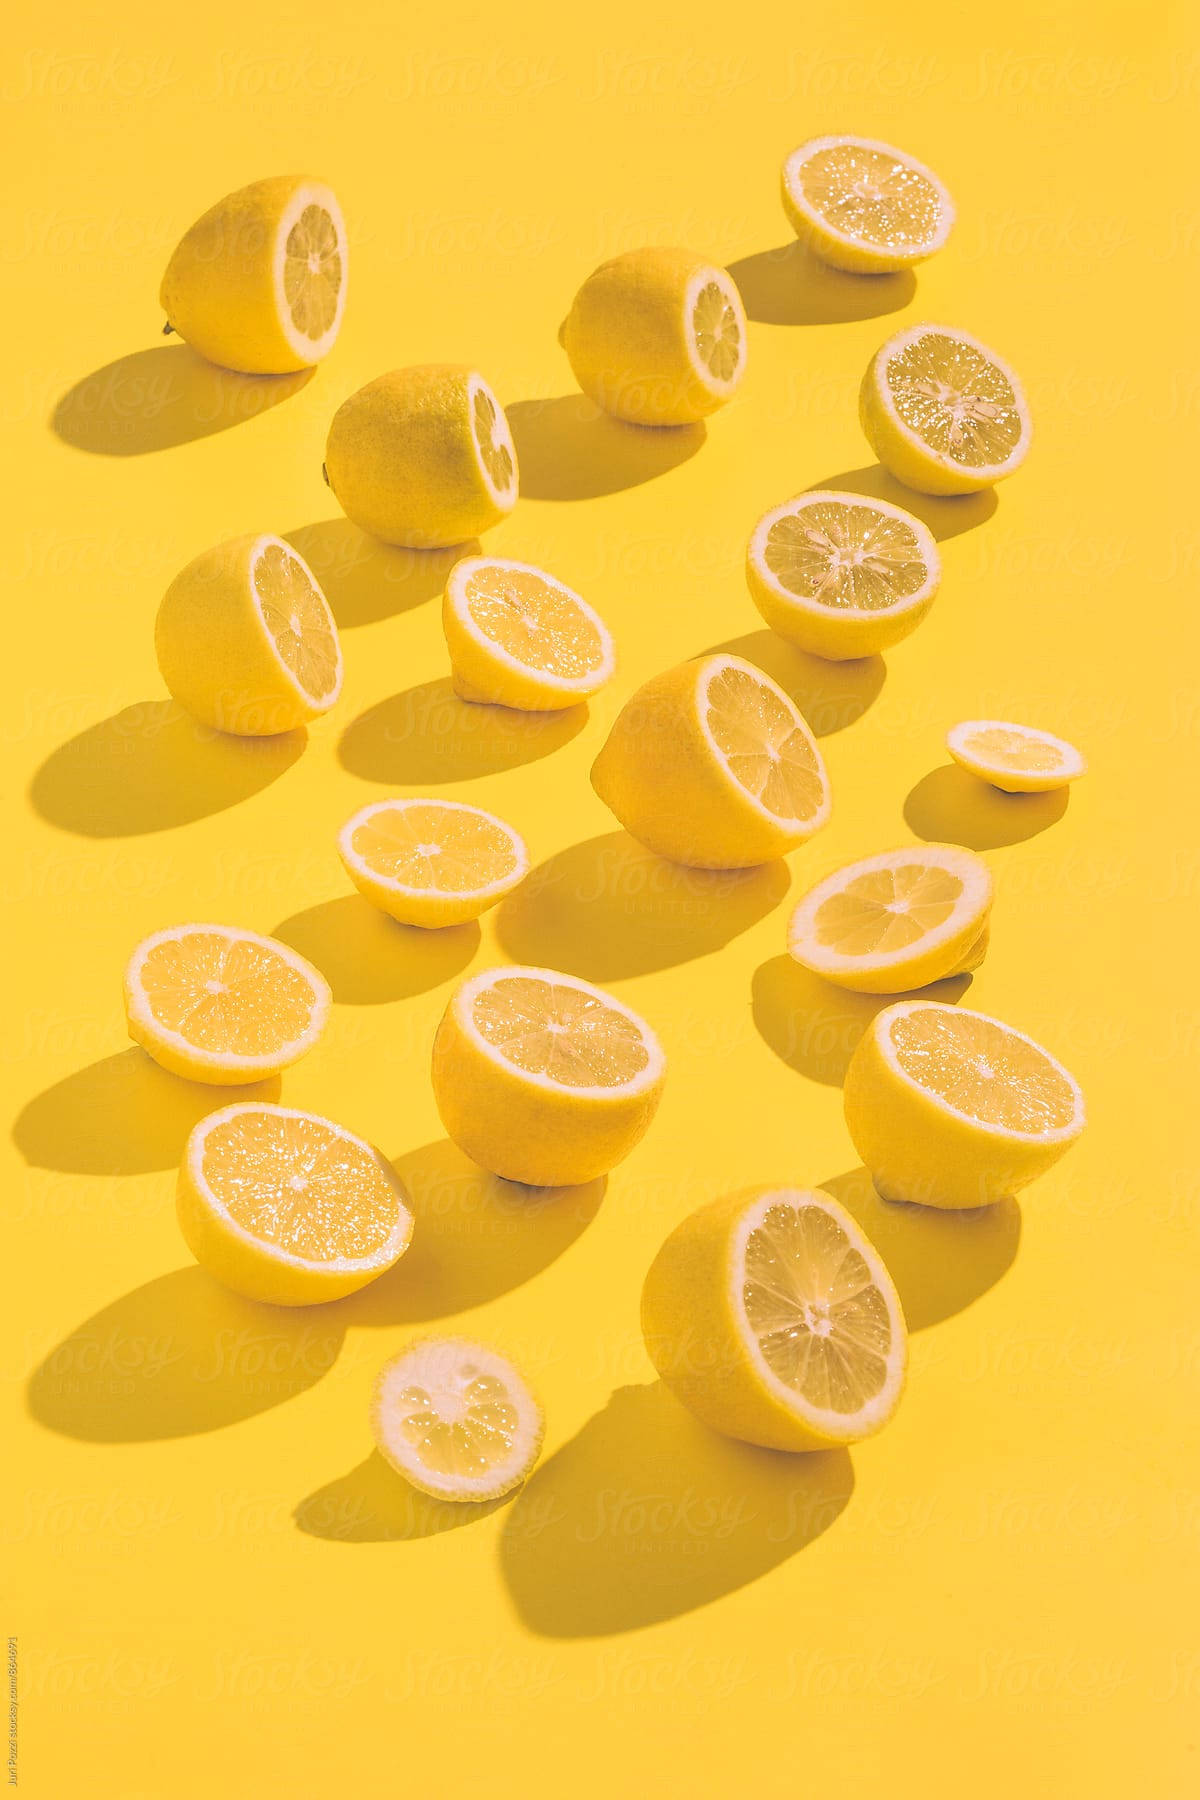 Lemon 1200X1800 Wallpaper and Background Image